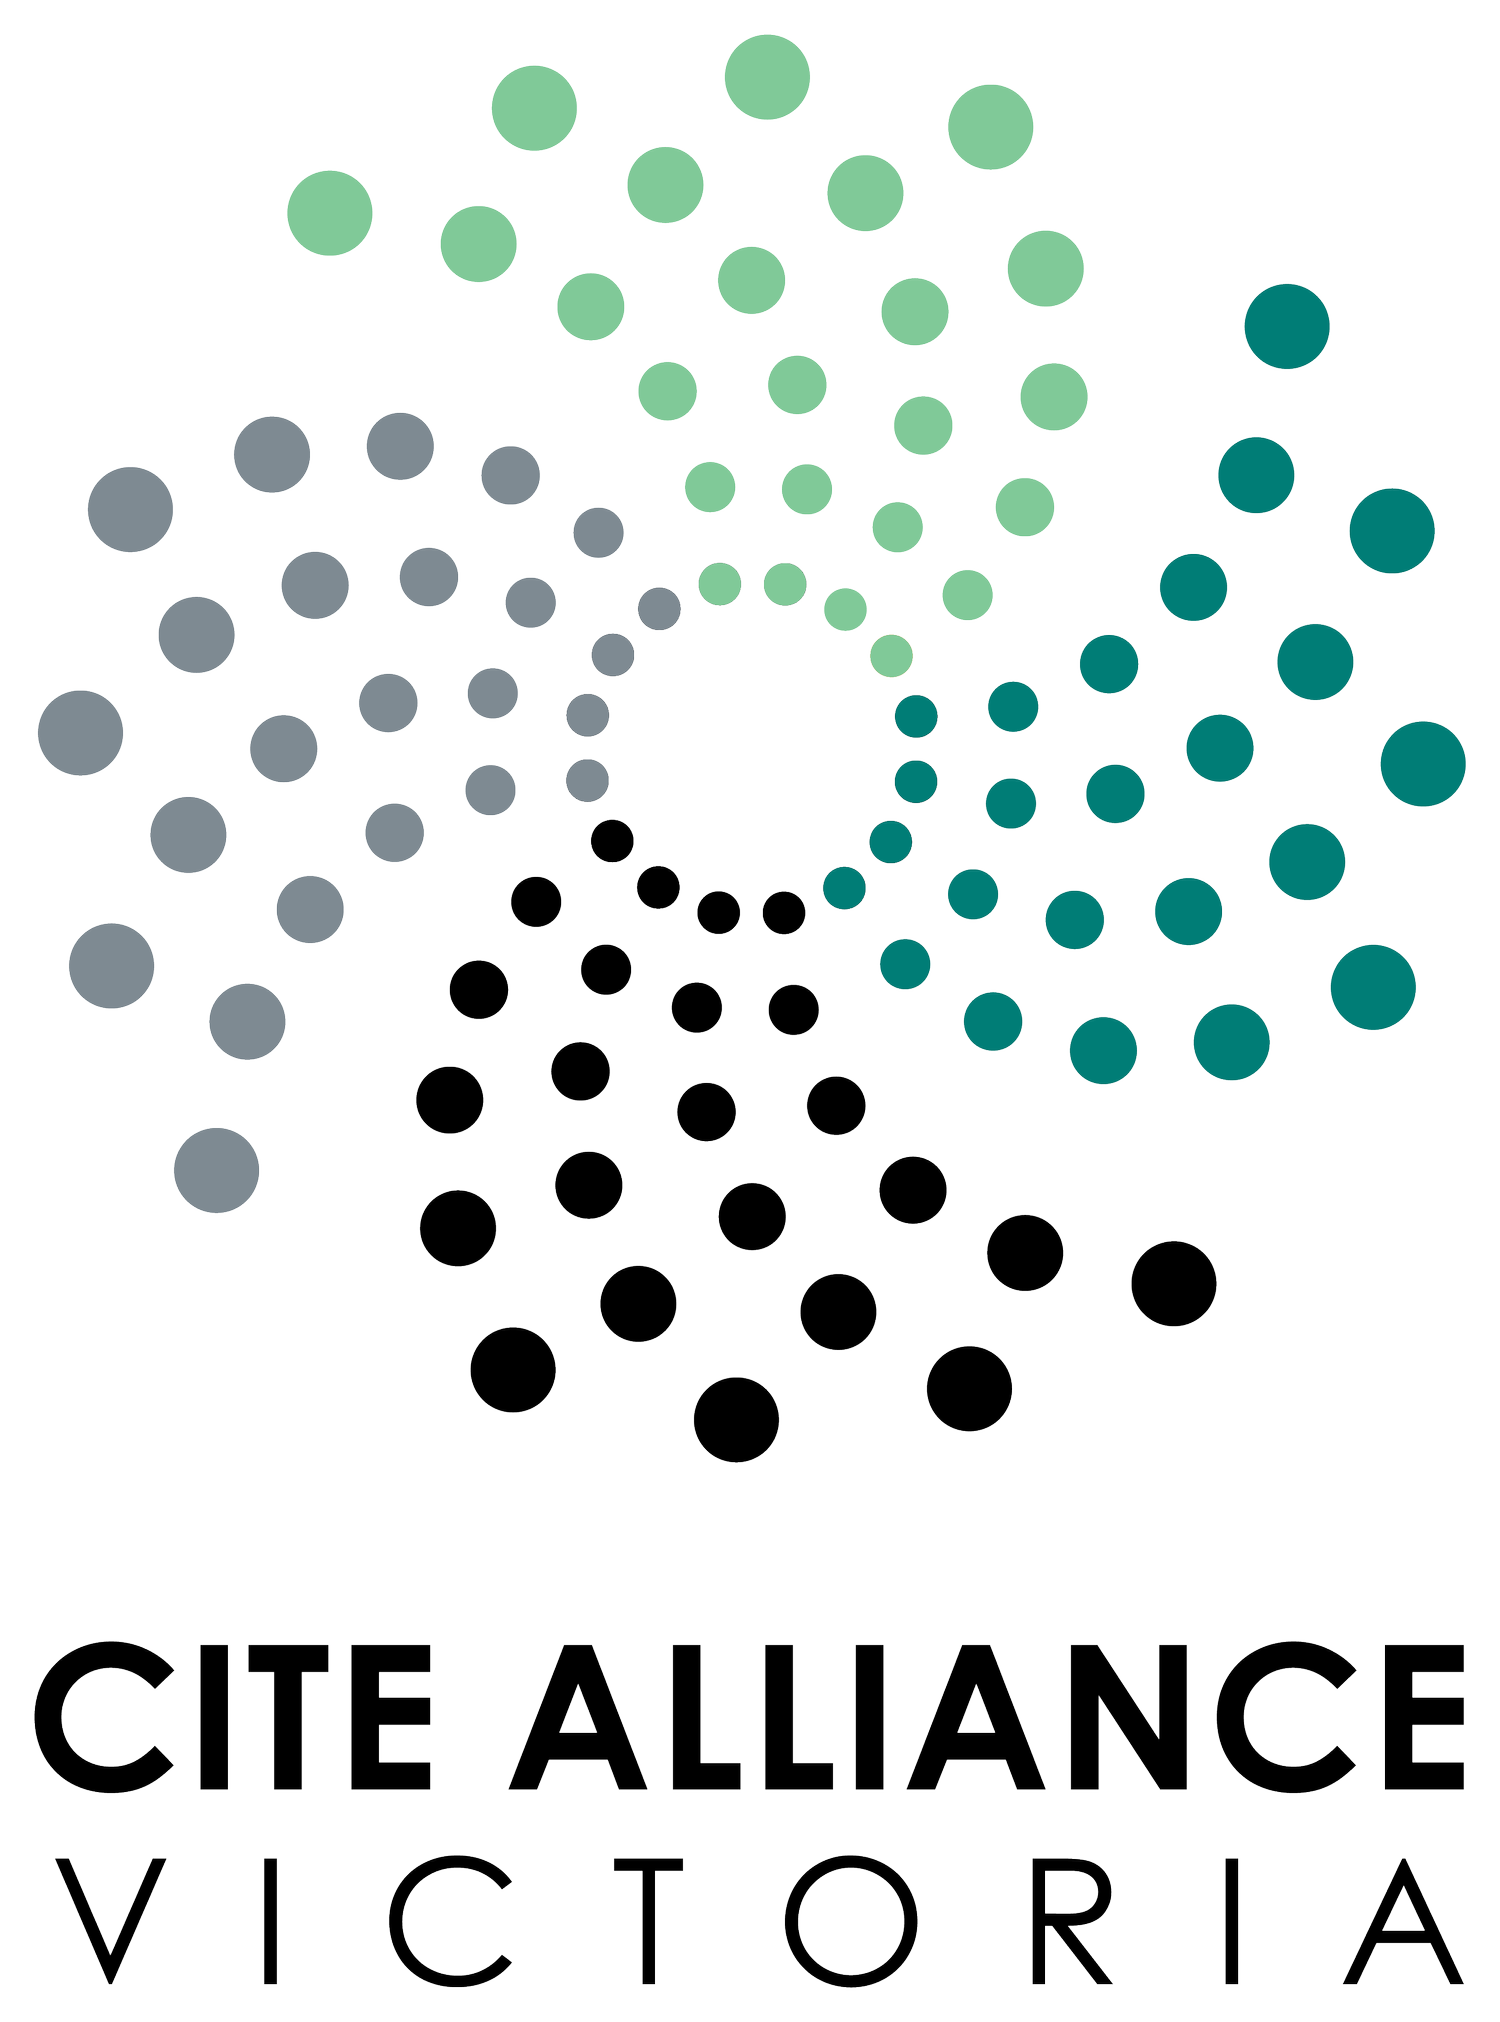 CITE Alliance VICTORIA